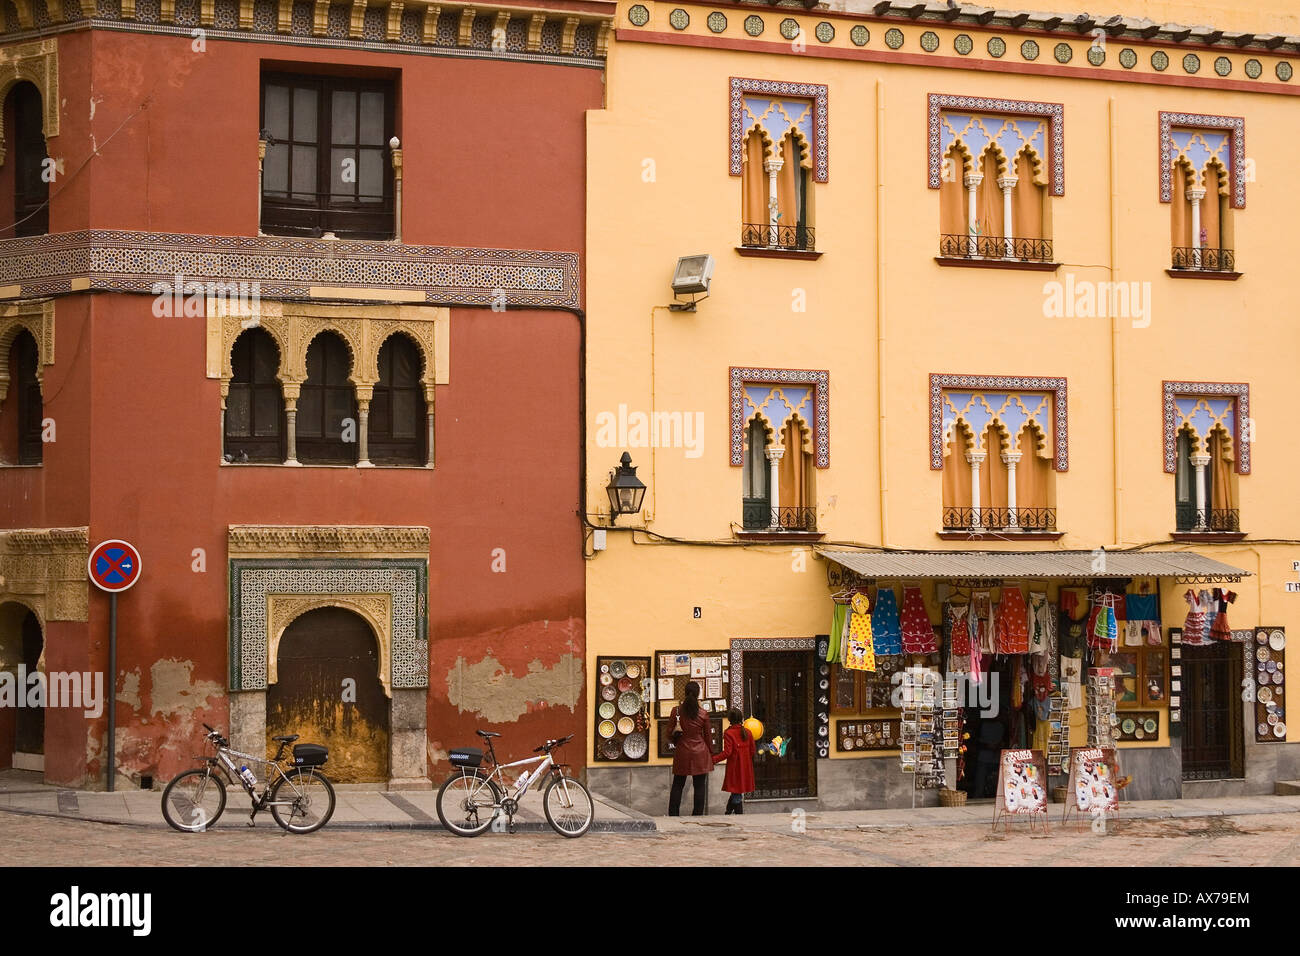 Su arquitectura de estilo morisco de Córdoba España Foto de stock